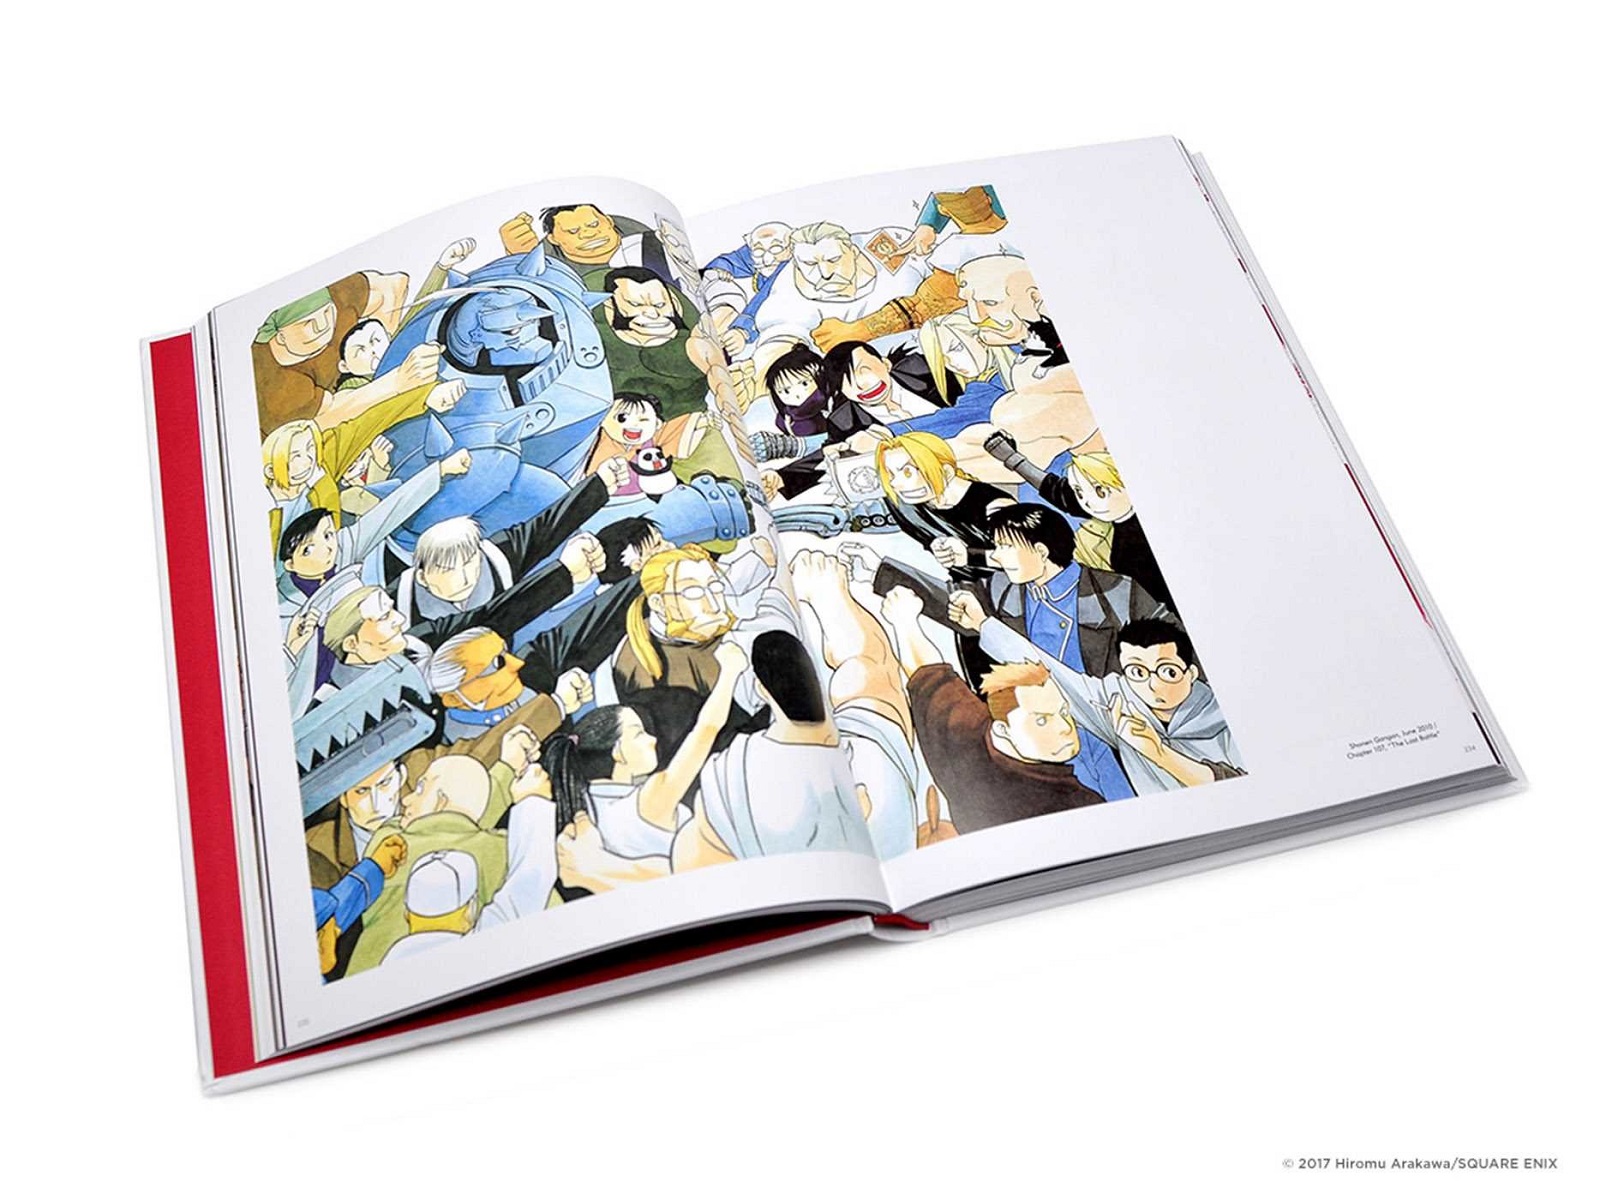 The Complete Art of Fullmetal Alchemist (Hardcover) image count 5